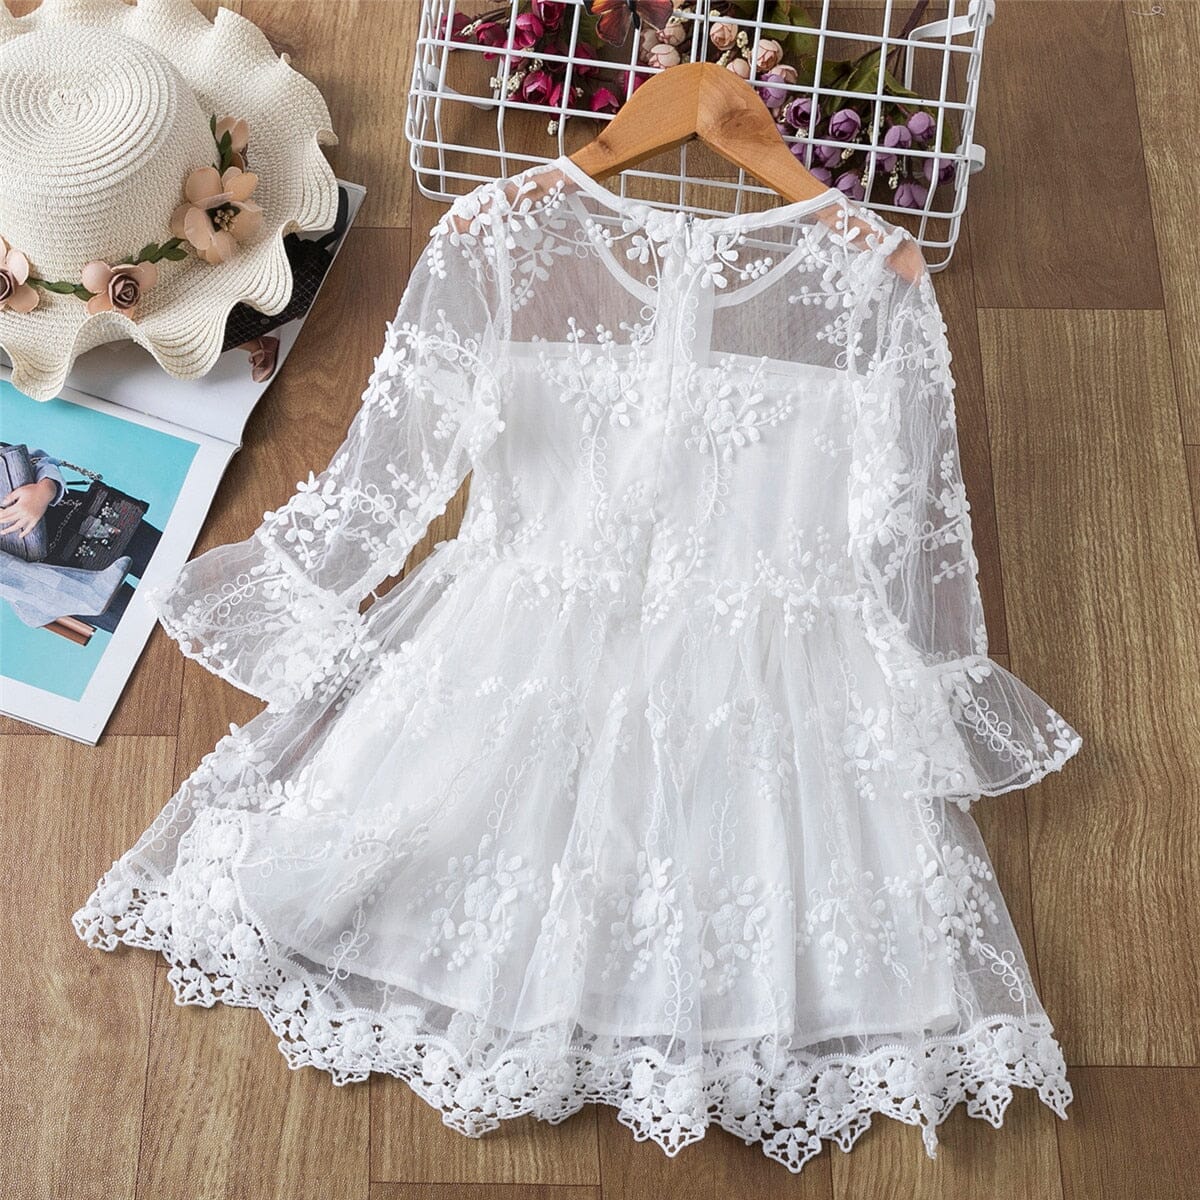 Princess Wedding Dress Baby & Toddler Dresses Fashionjosie 423 white 3T 